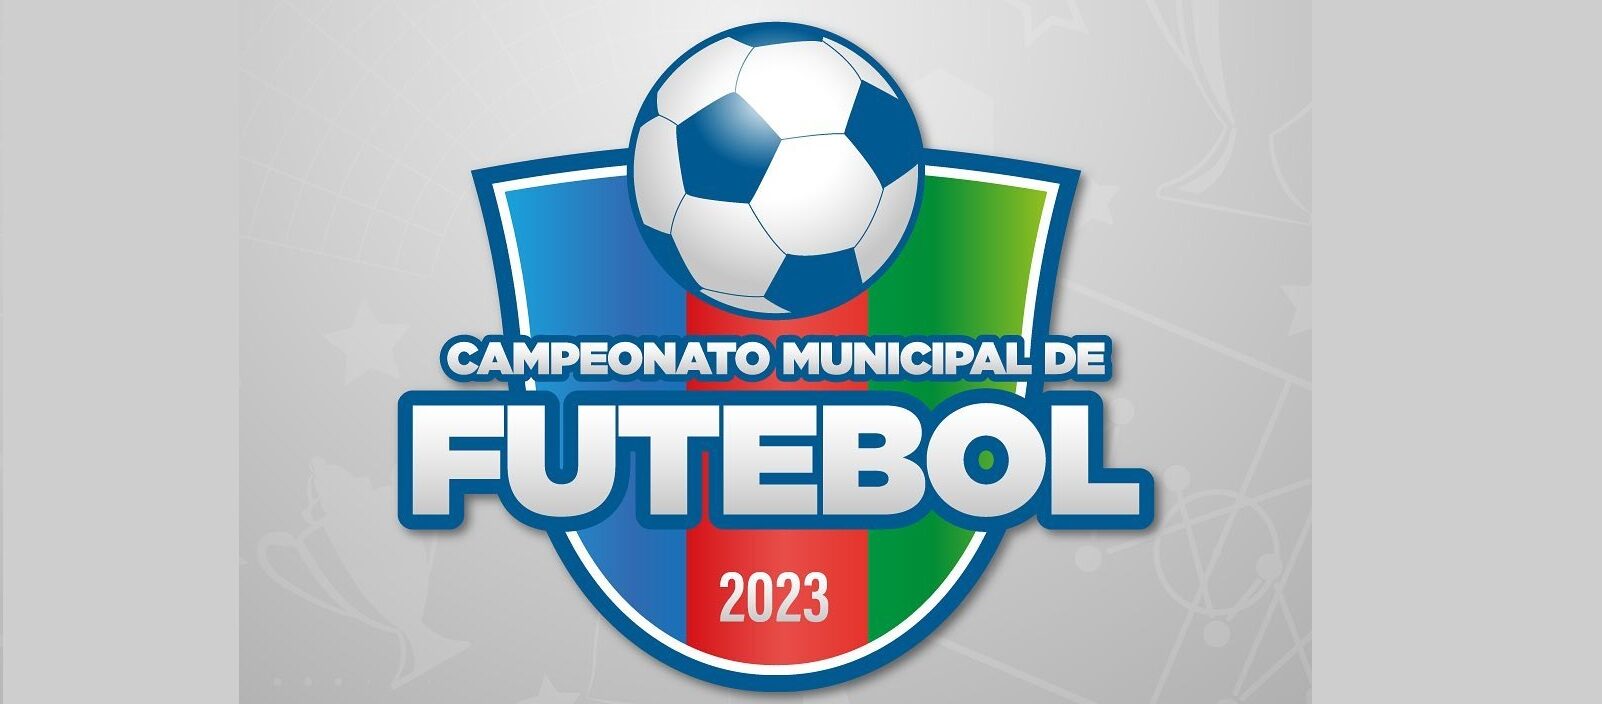 Secretaria de Esporte realiza Campeonato Municipal de Futebol 2022